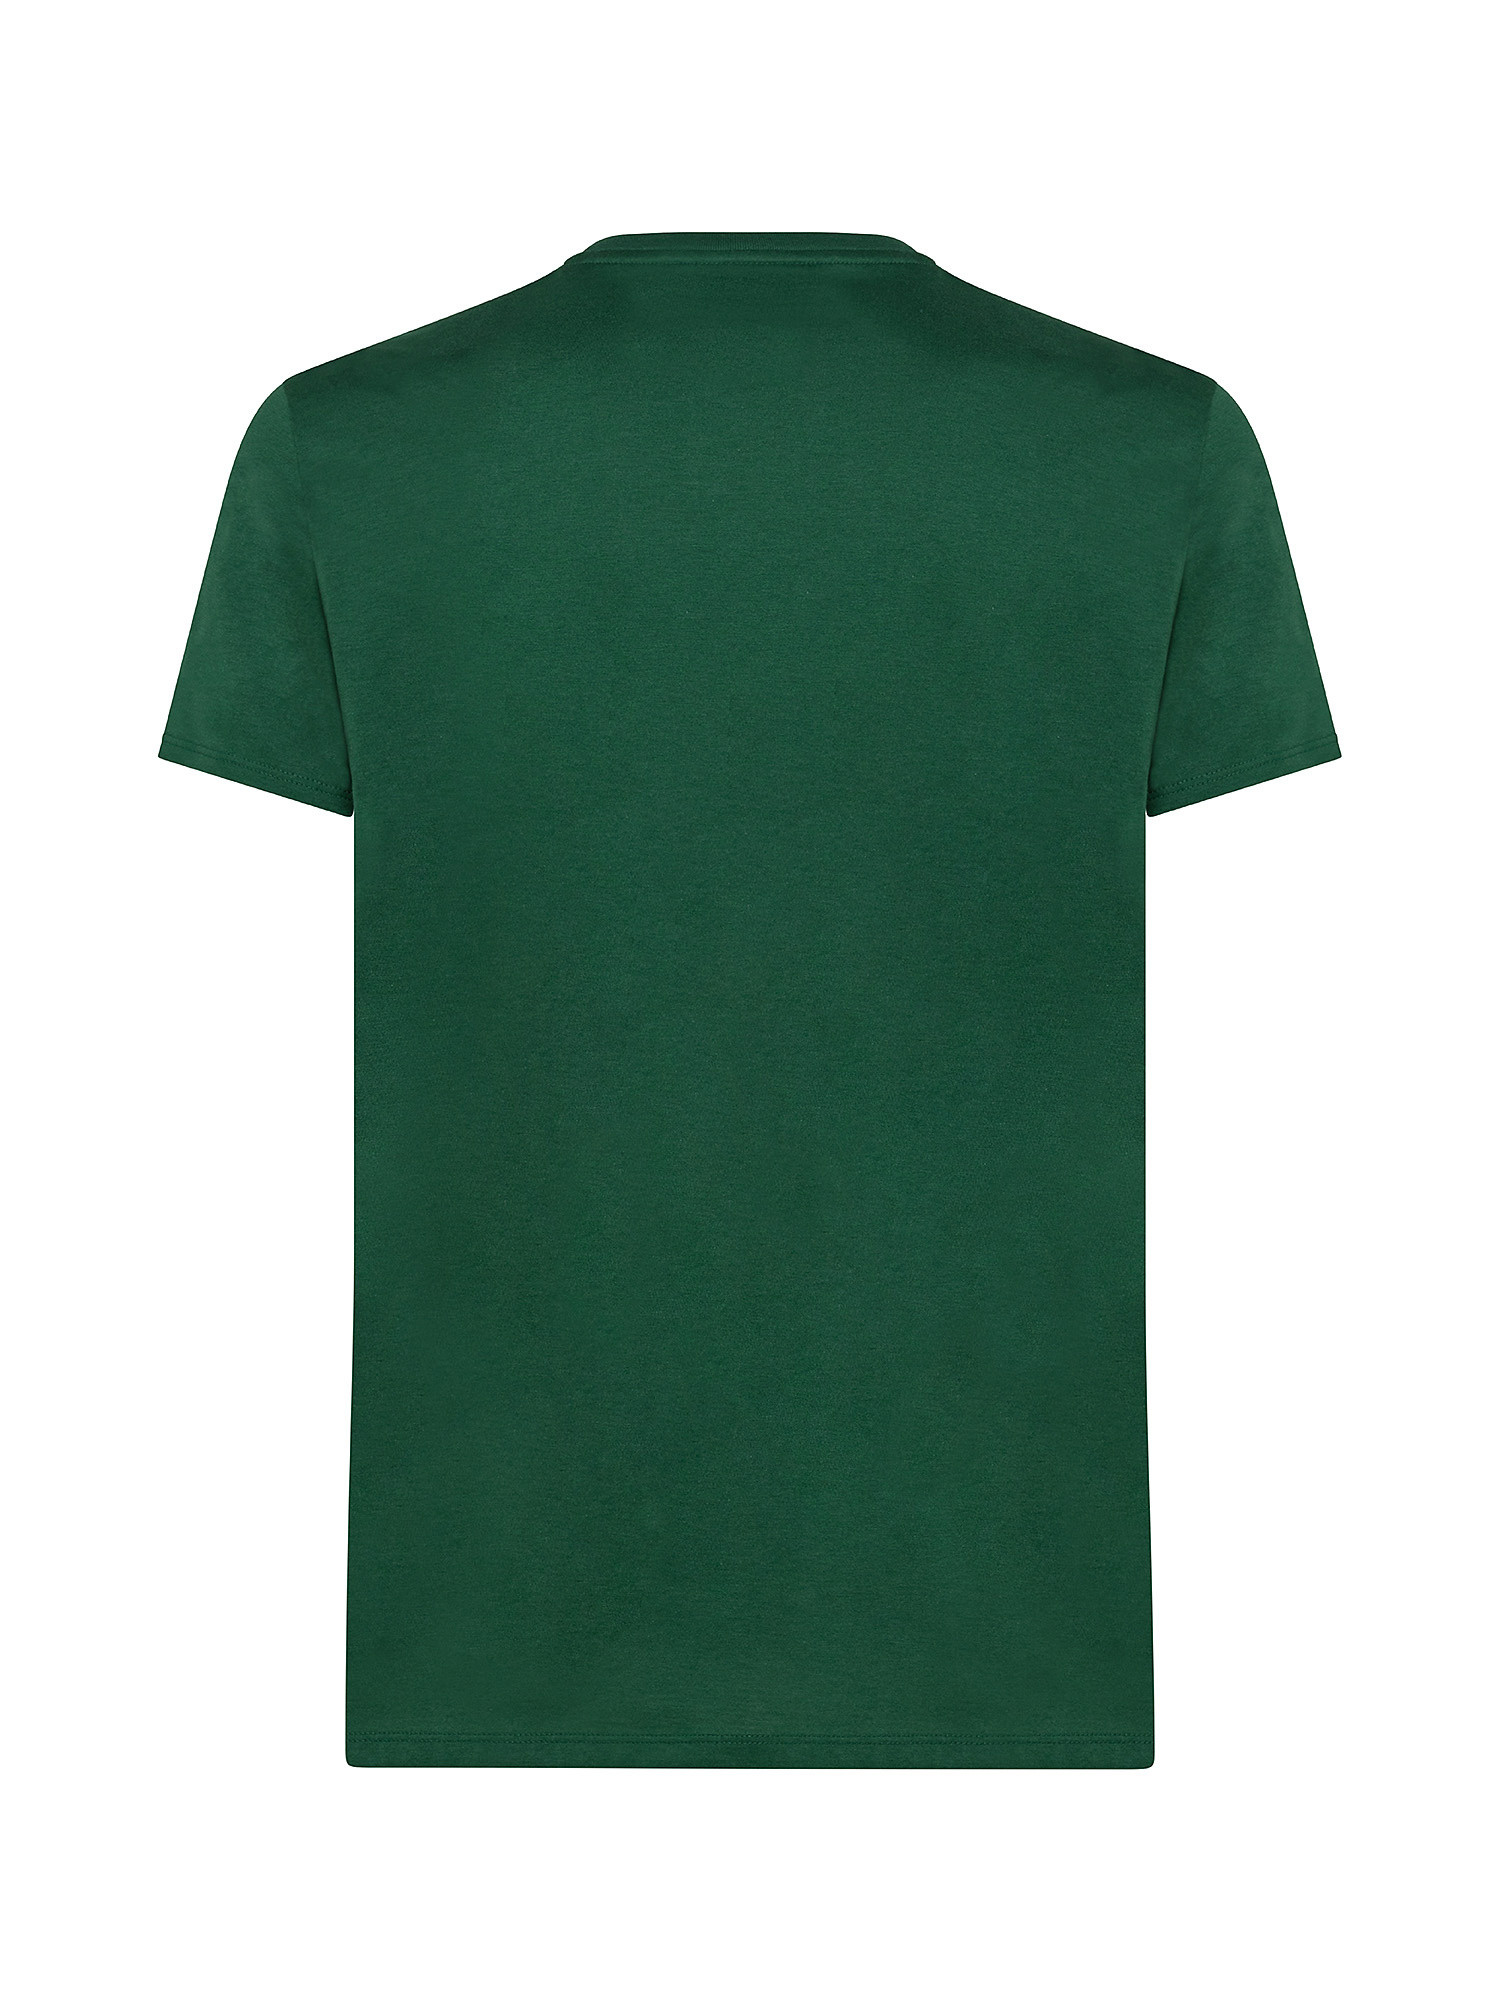 T-shirt, Verde, large